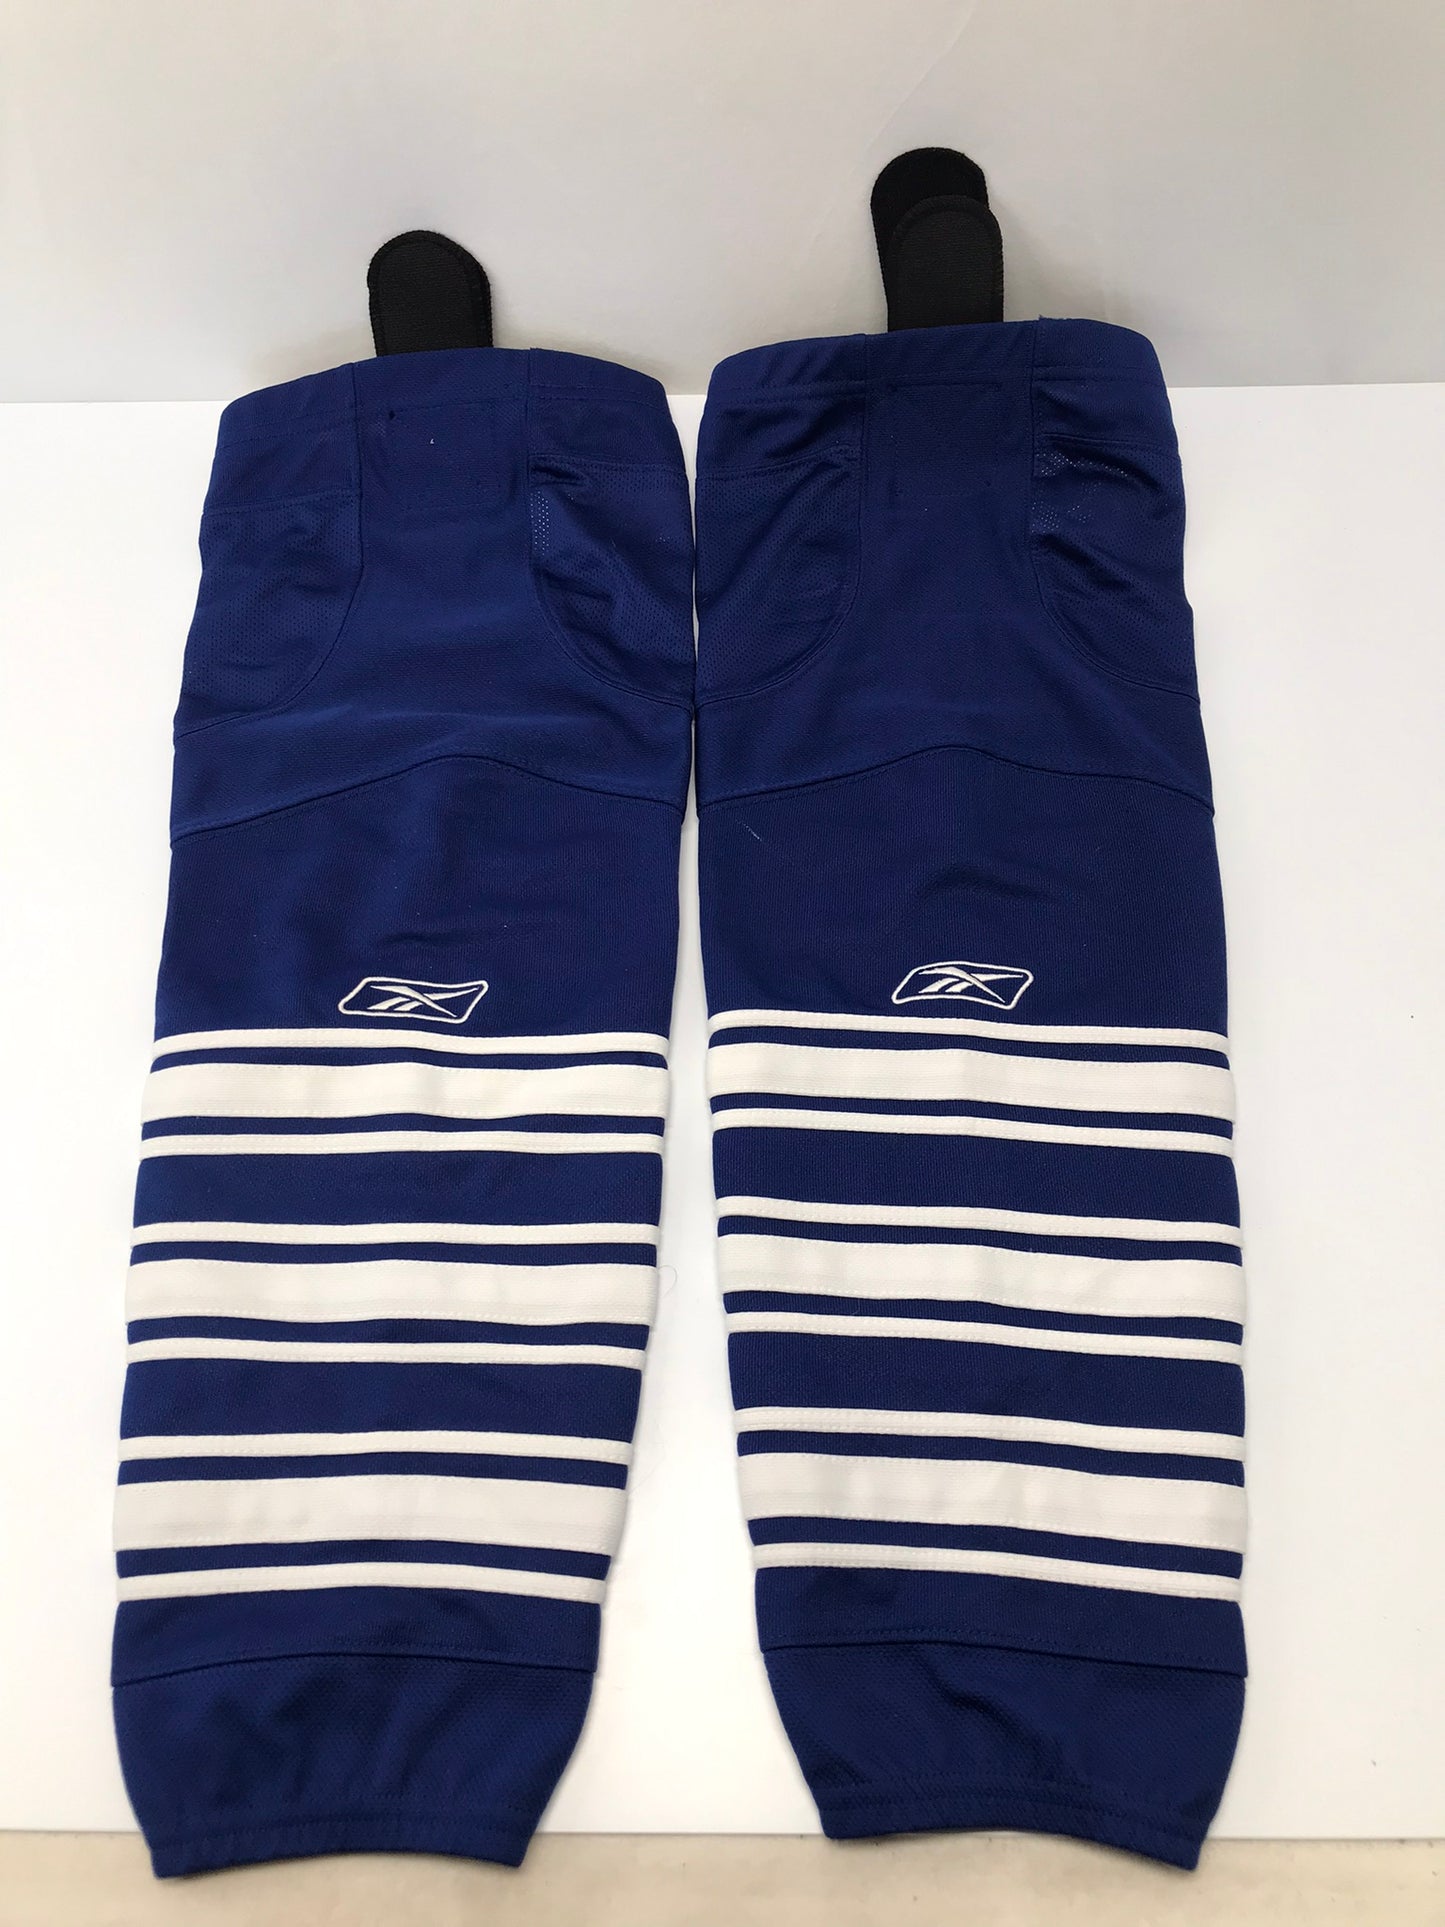 Hockey Socks Child Size 24 inch Intermediate NEW Reebok Blue White Two velcro fasteners interlock inserts